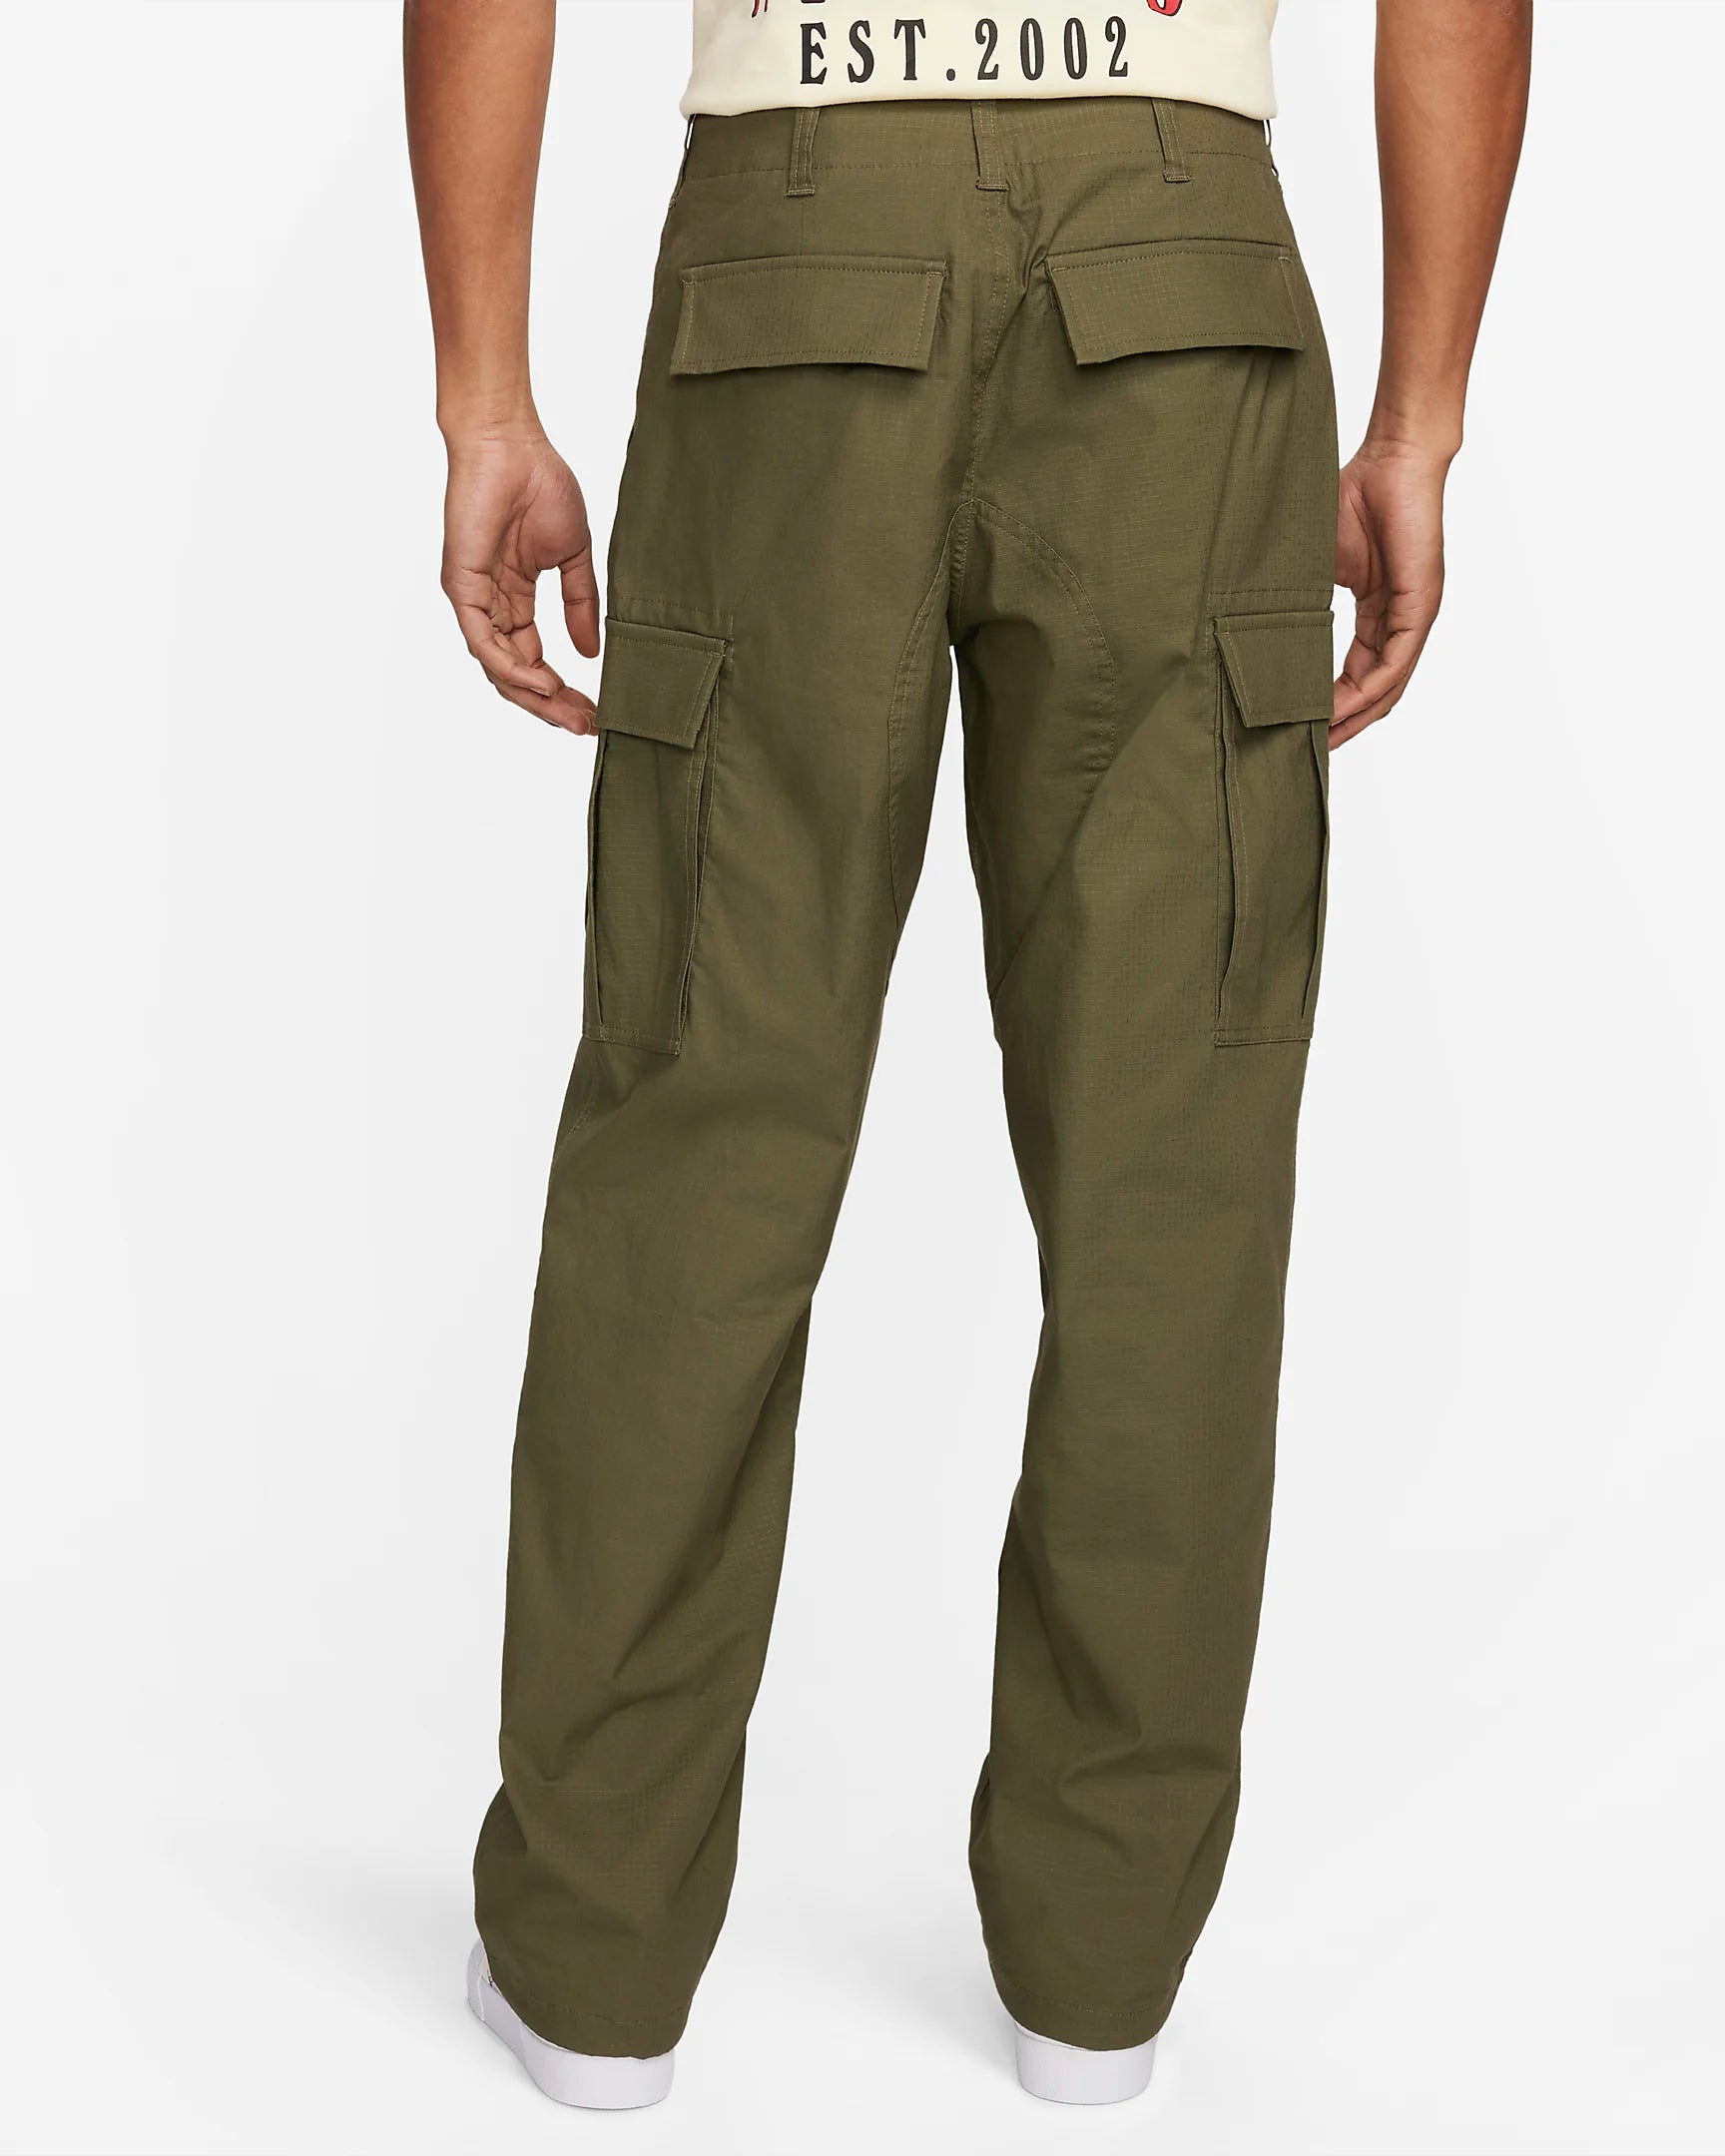 Nike SB Kearny Cargo Pants - Medium Olive/White